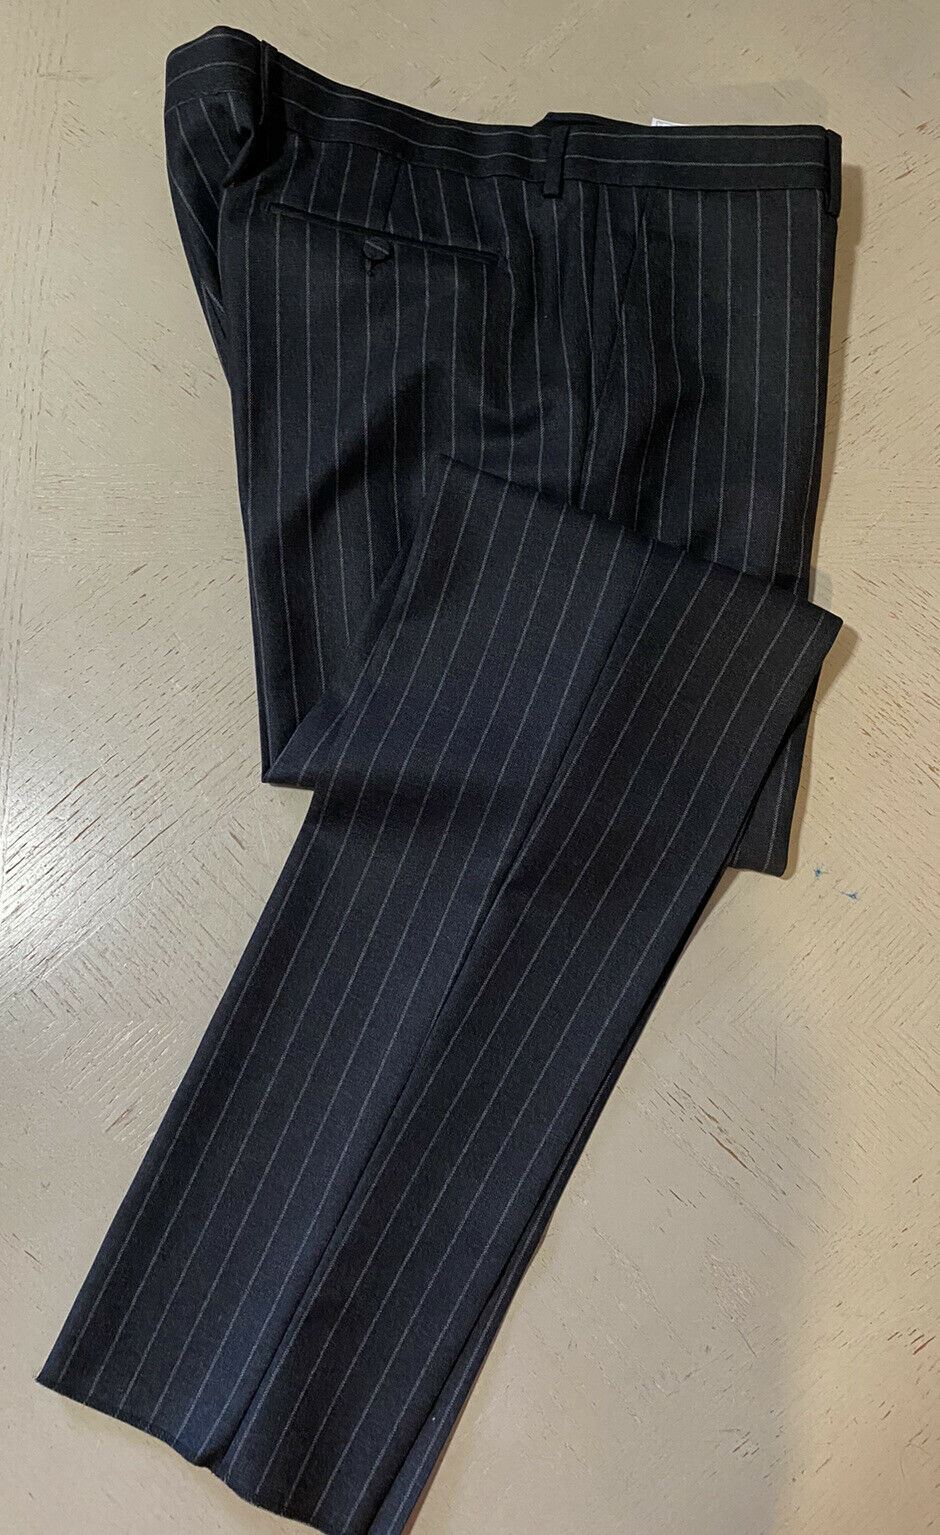 New $4490 Gucci Men’s Suit Striped DK Gray 46R US ( 56R Eu ) Italy